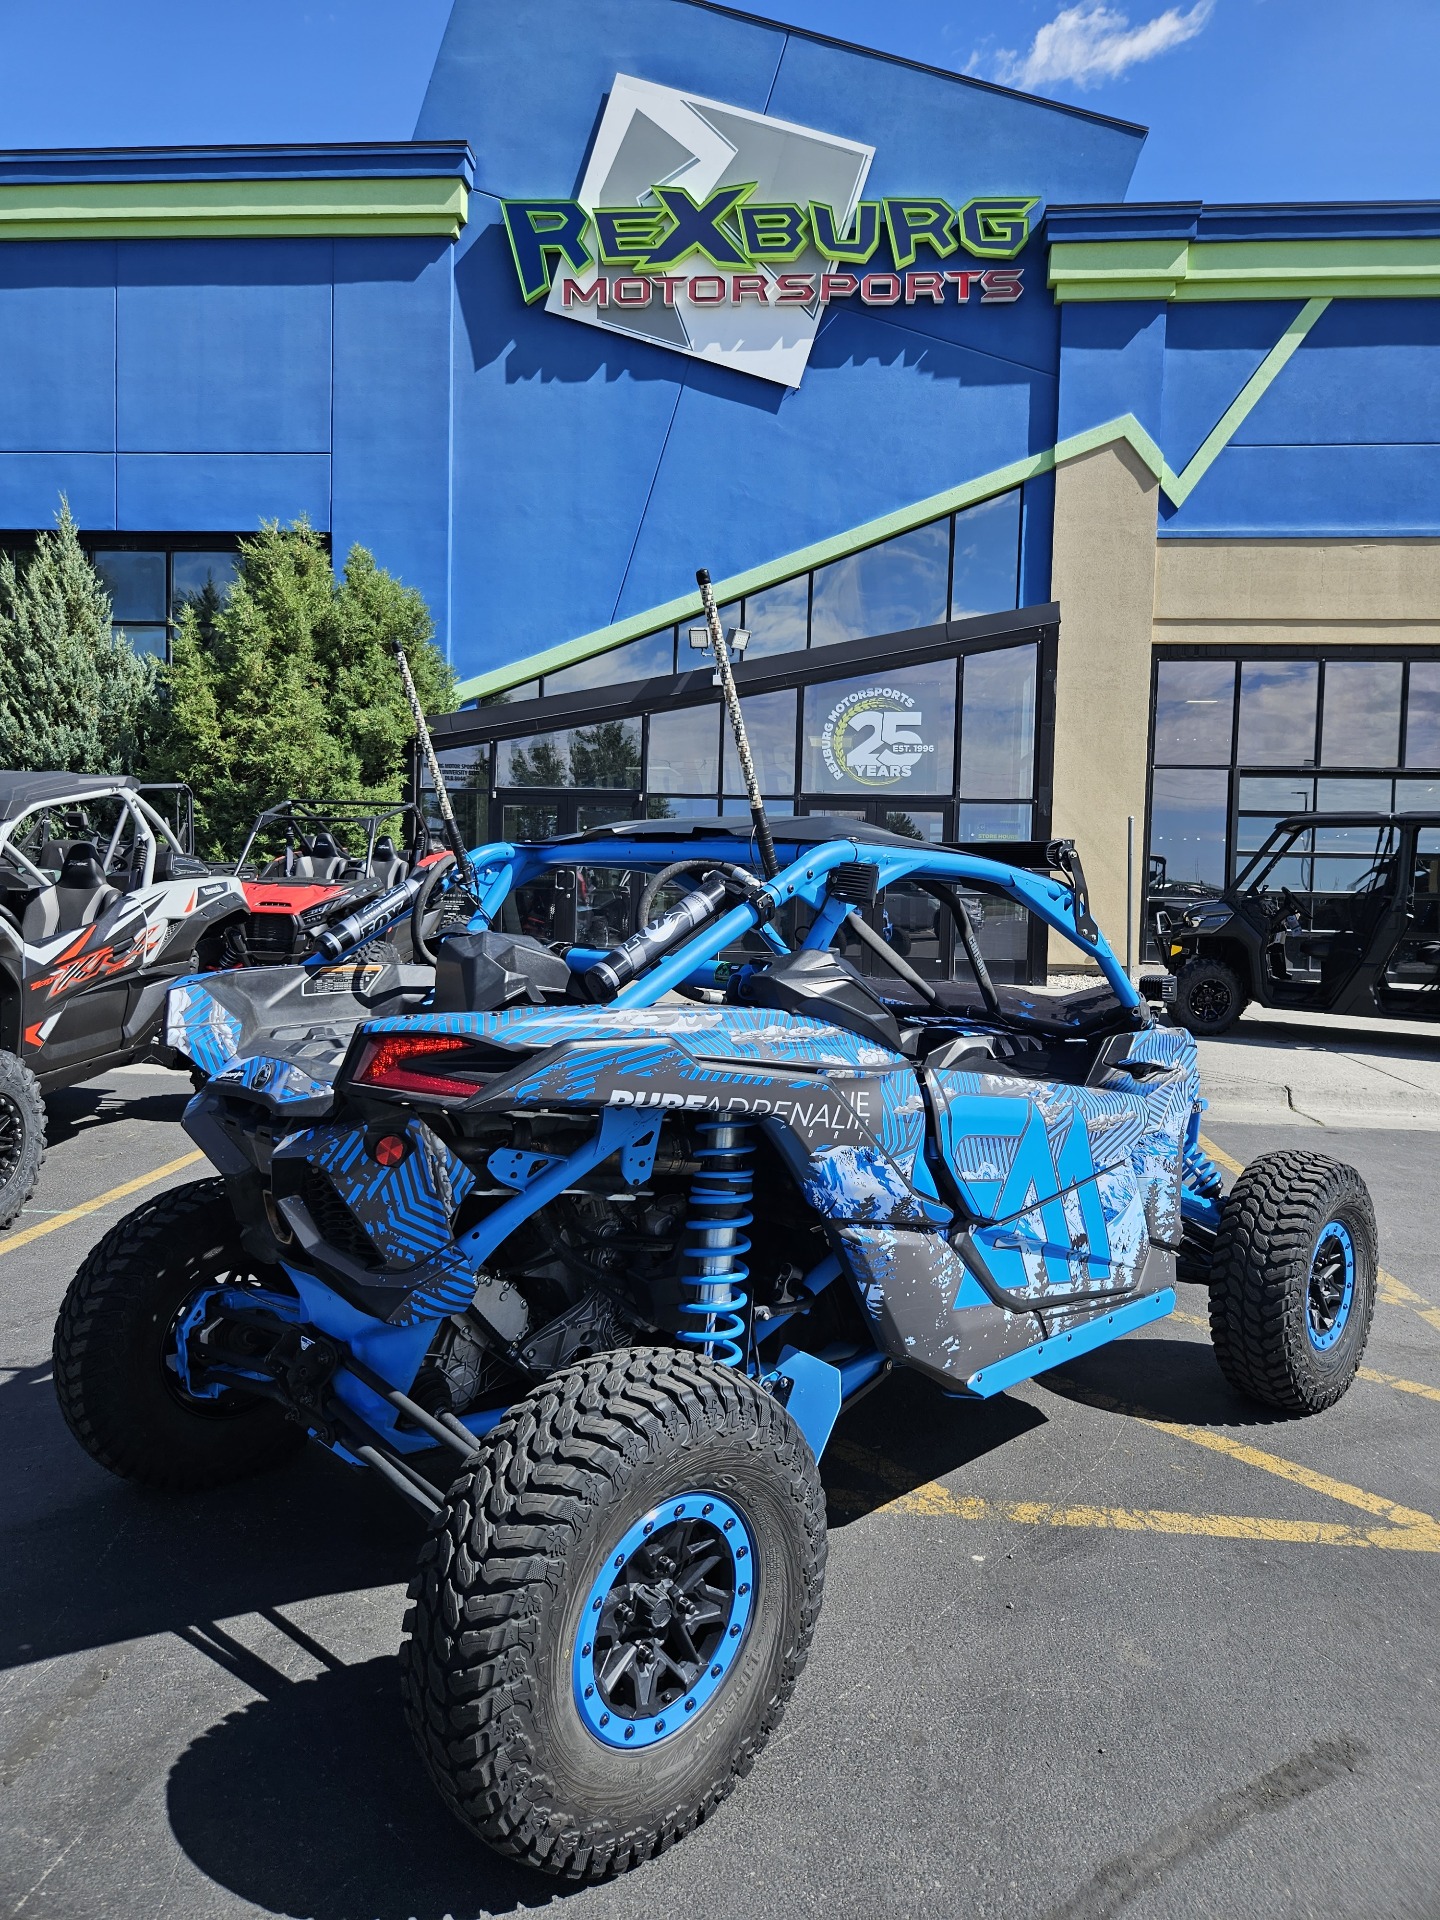 2019 Can-Am Maverick X3 X rc Turbo R in Rexburg, Idaho - Photo 3